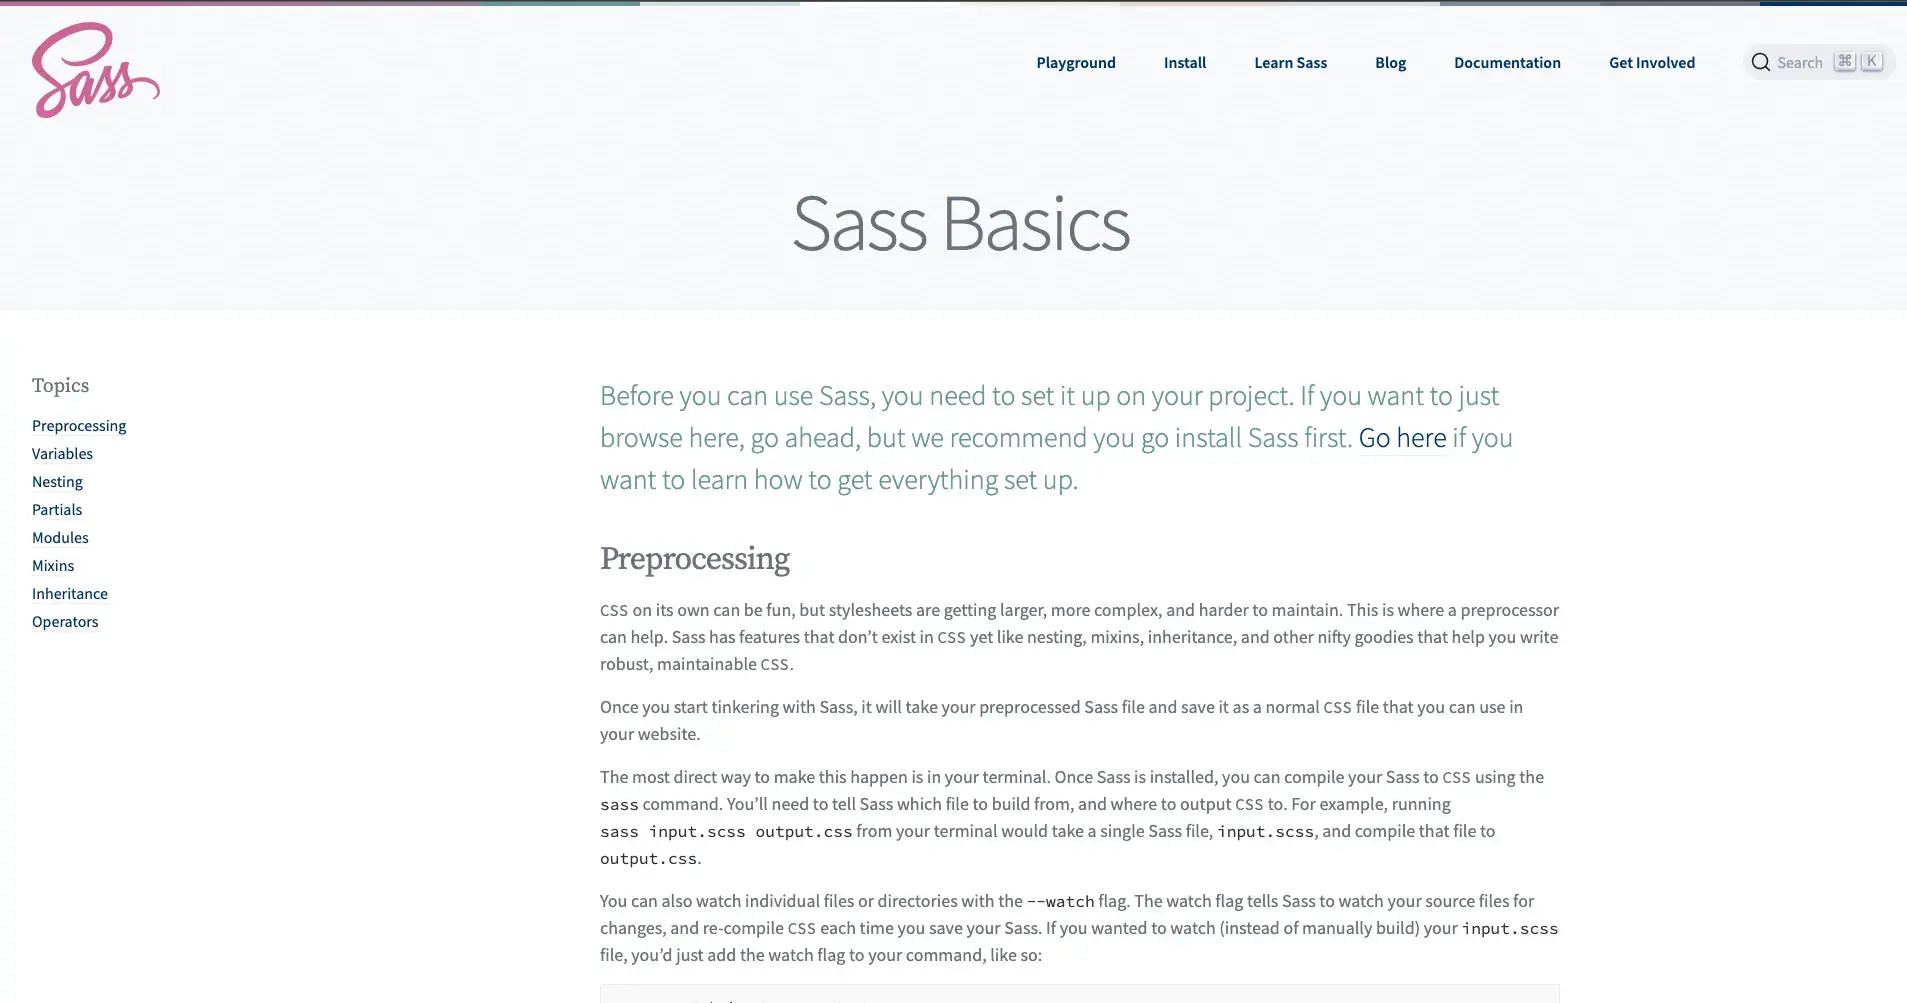 Sass basics